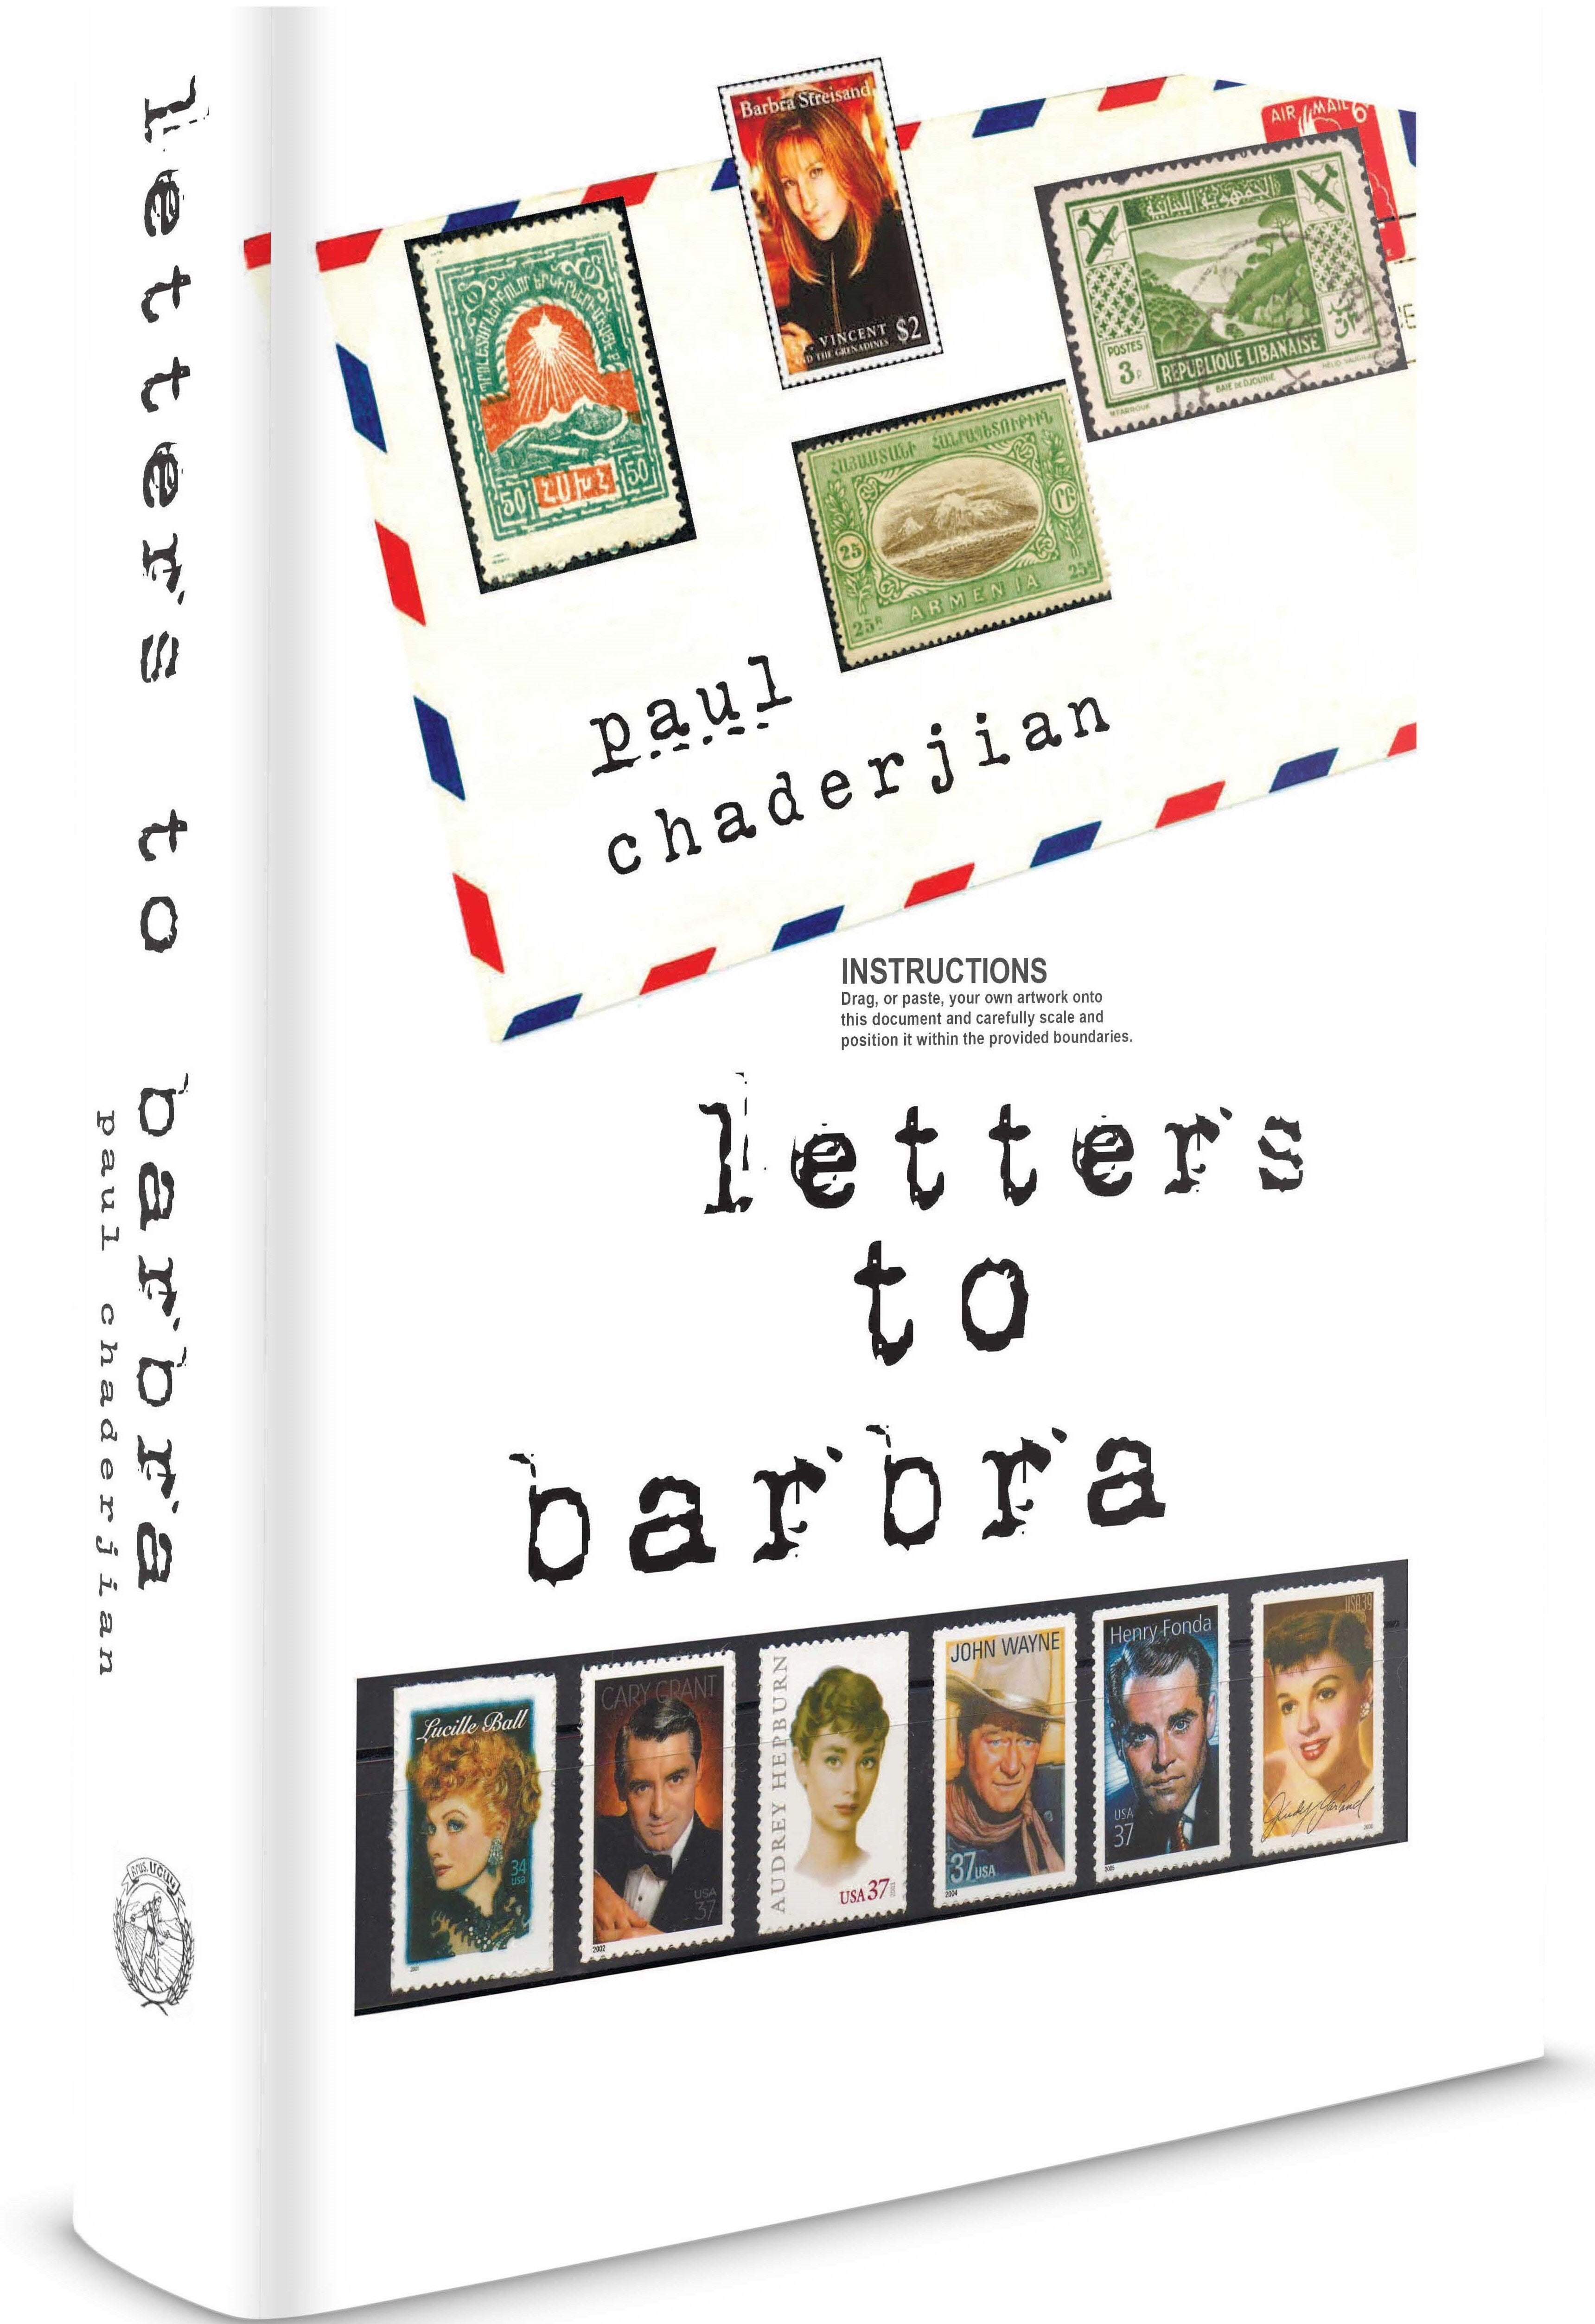 Paul Chaderjian - Letters to Barbra